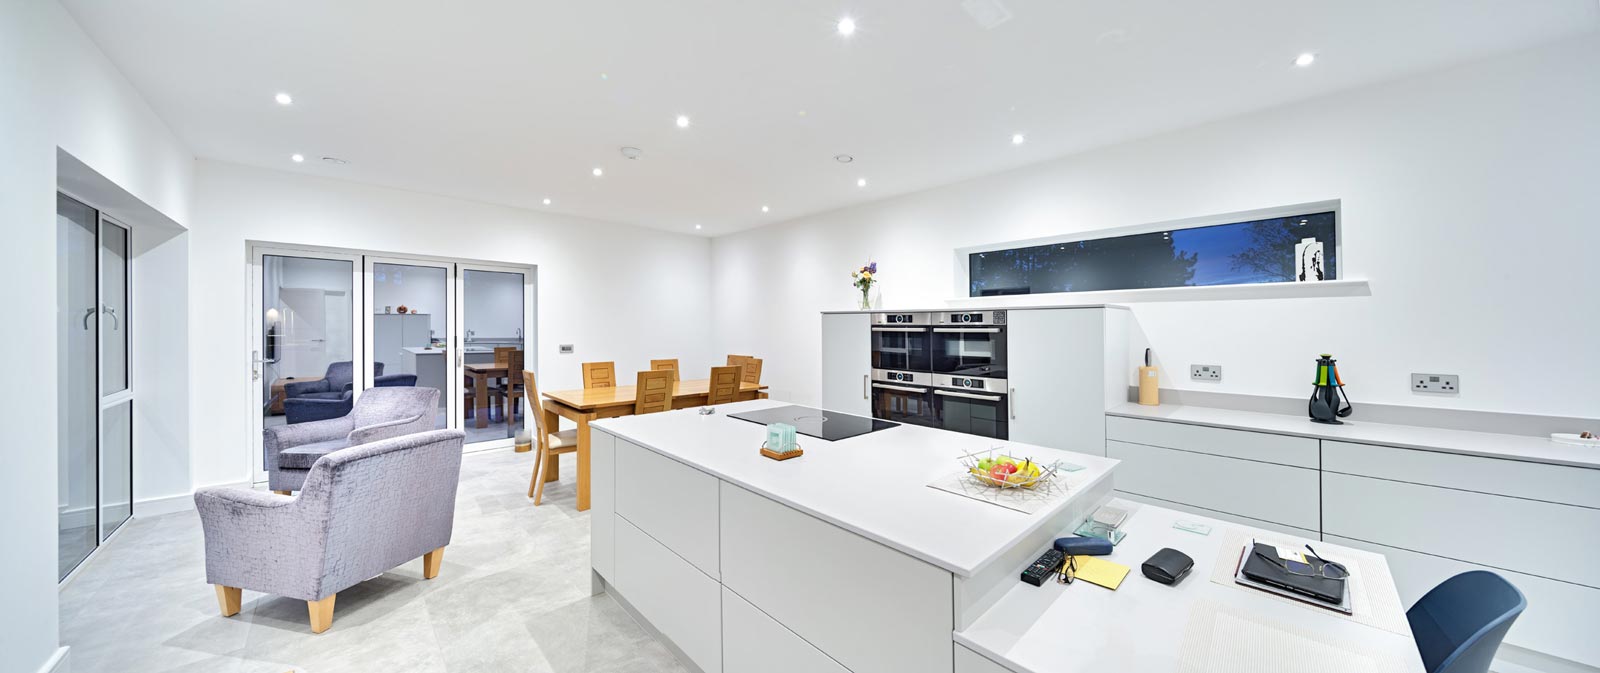 Stark white kitchen interior with large island and armchairs looking towards bifold doors by interior photographer Matthew Jones